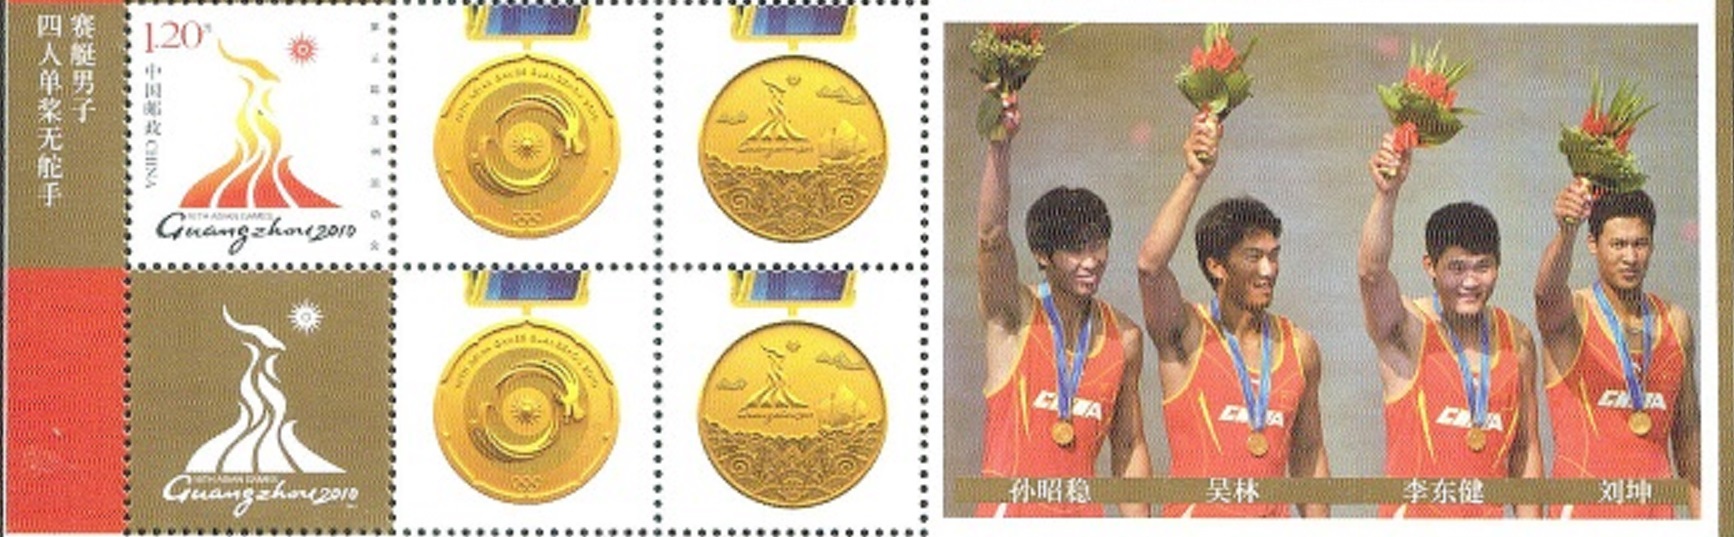 stamp chn 2009 ms 16th asian games guangzhou m4